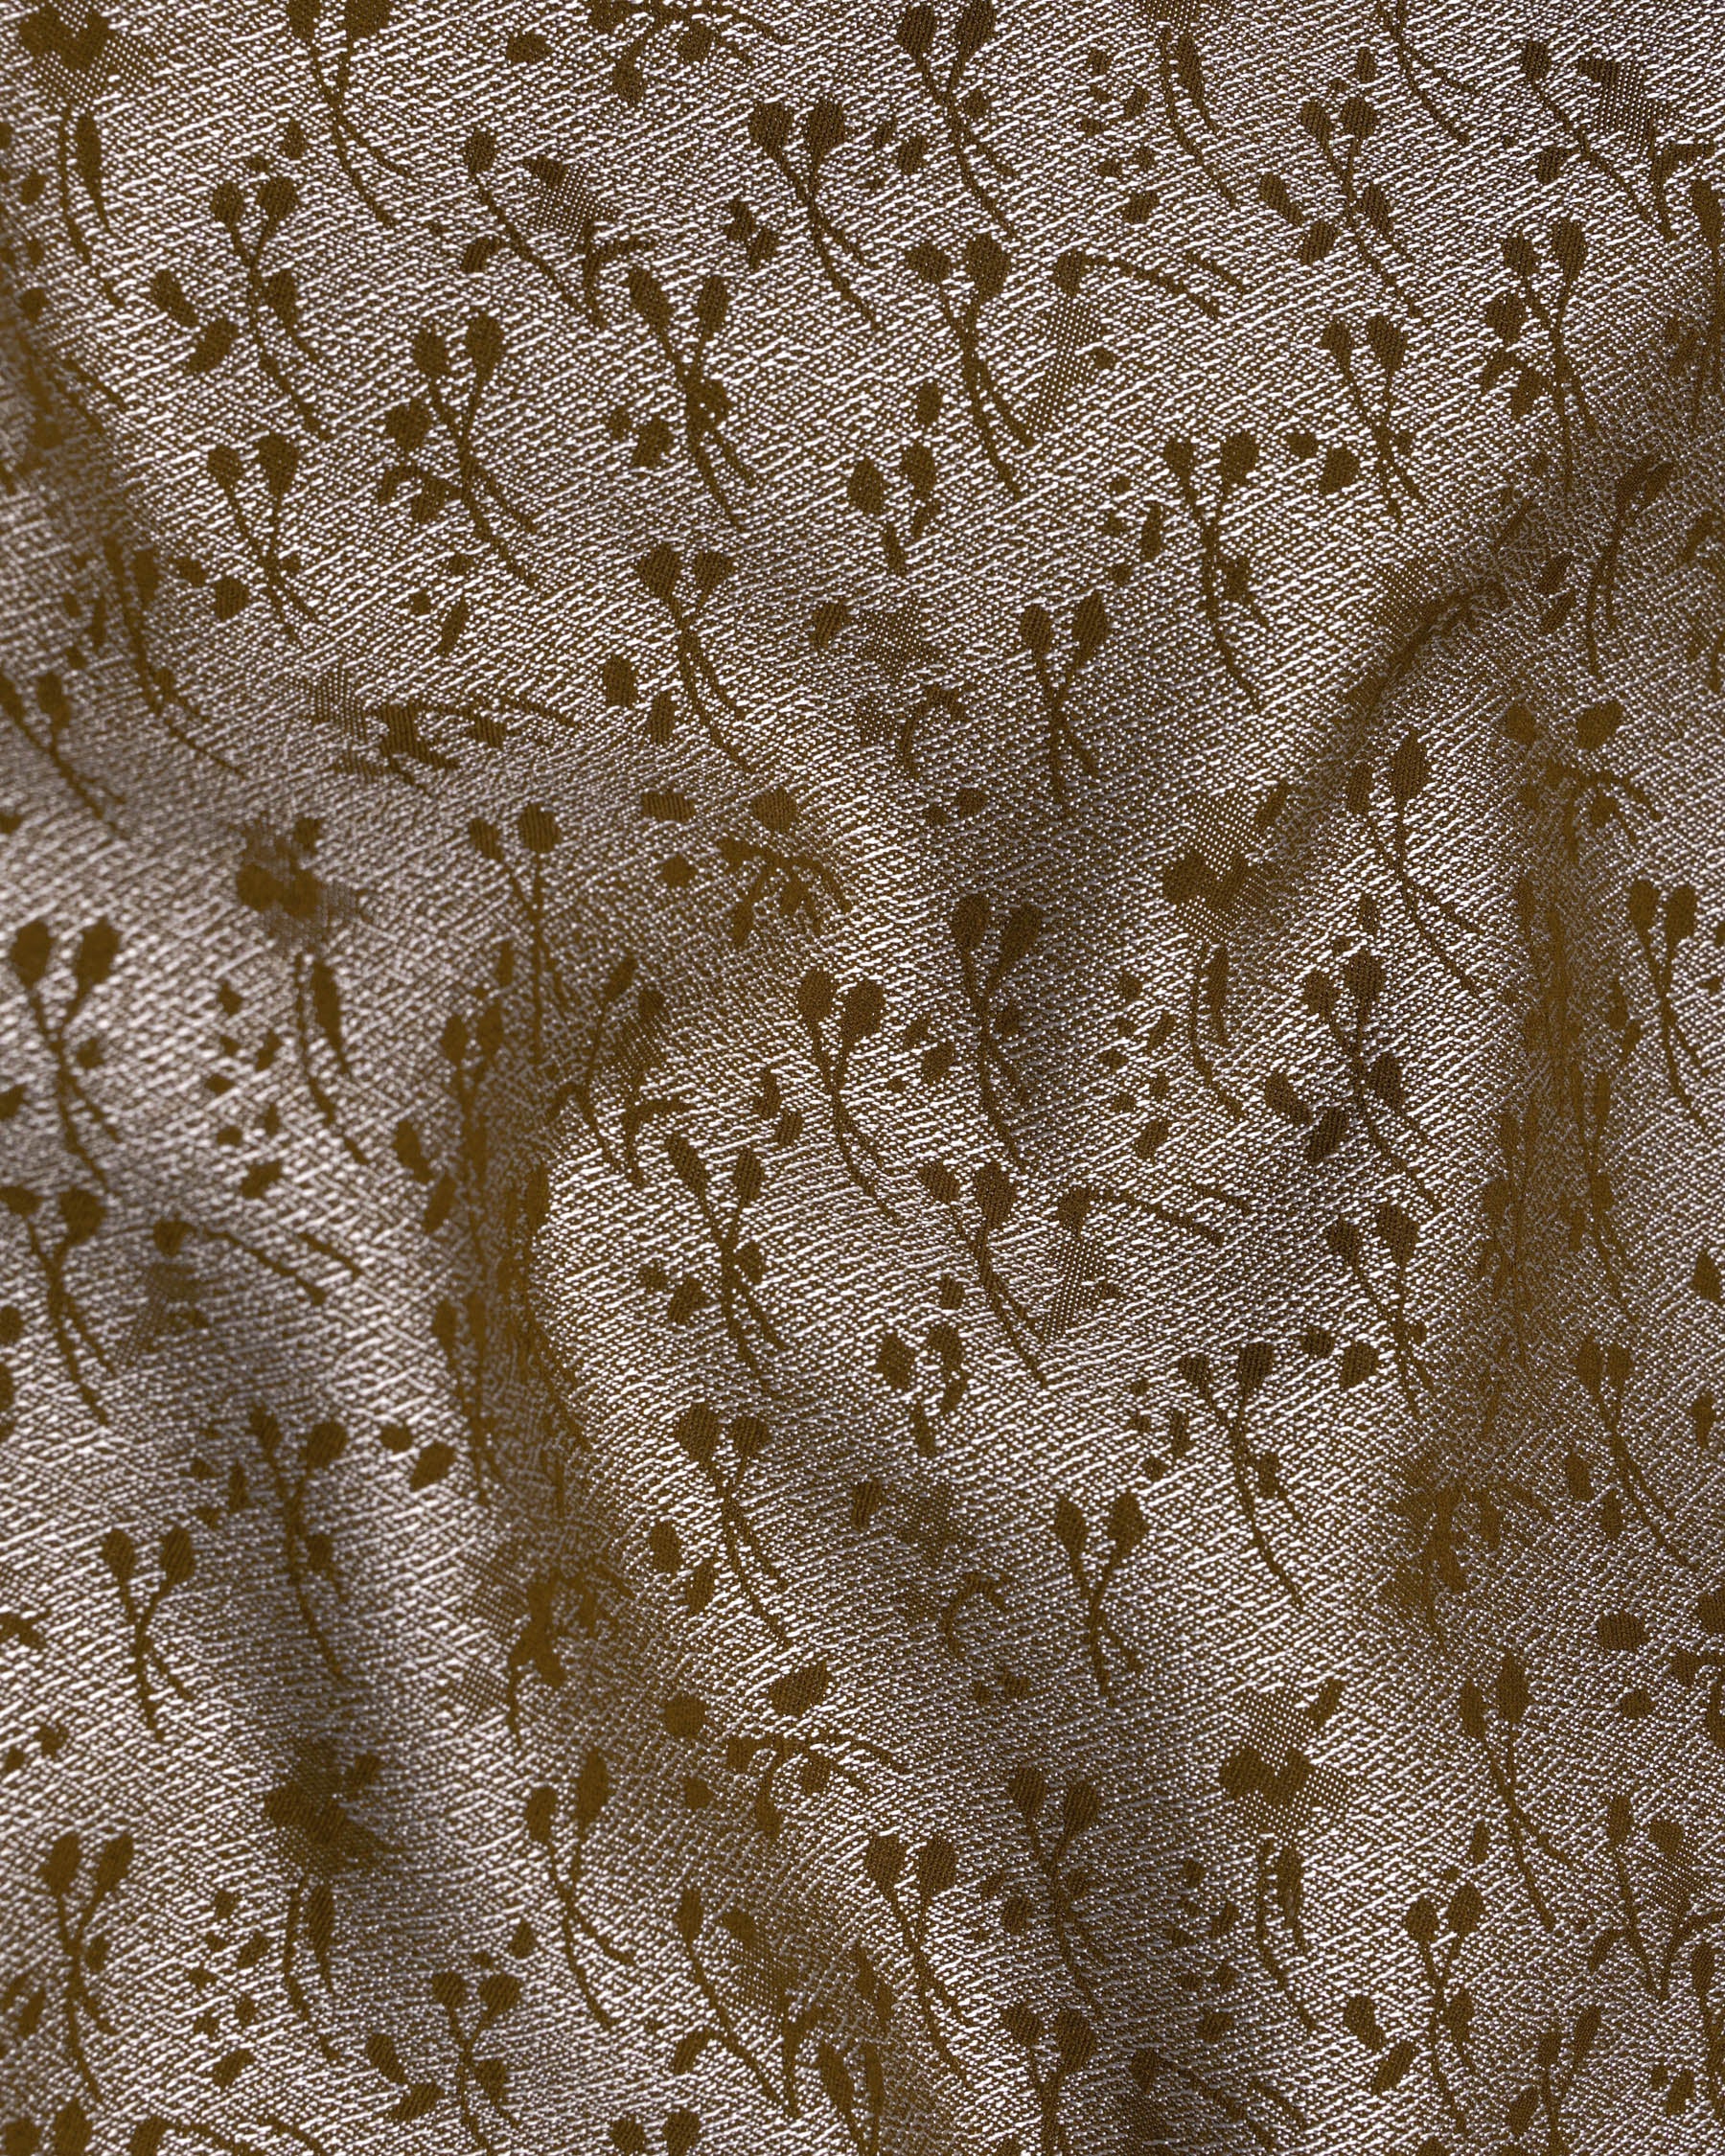 Bronzetone Ditzy Textured Cross Placket Bandhgala Suit